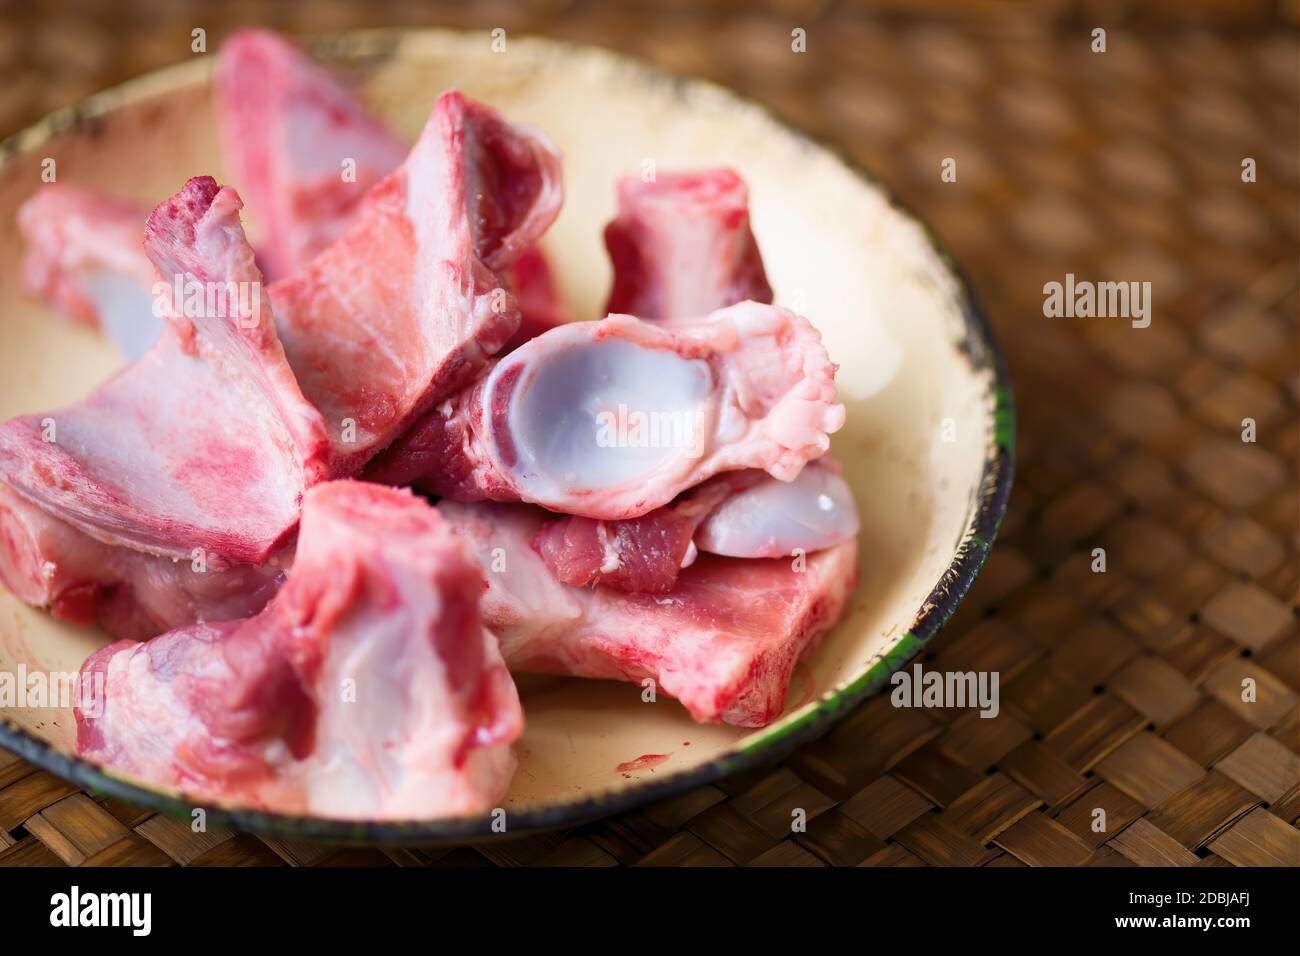 close up rustic pork bones flavoring ingredient Stock Photo